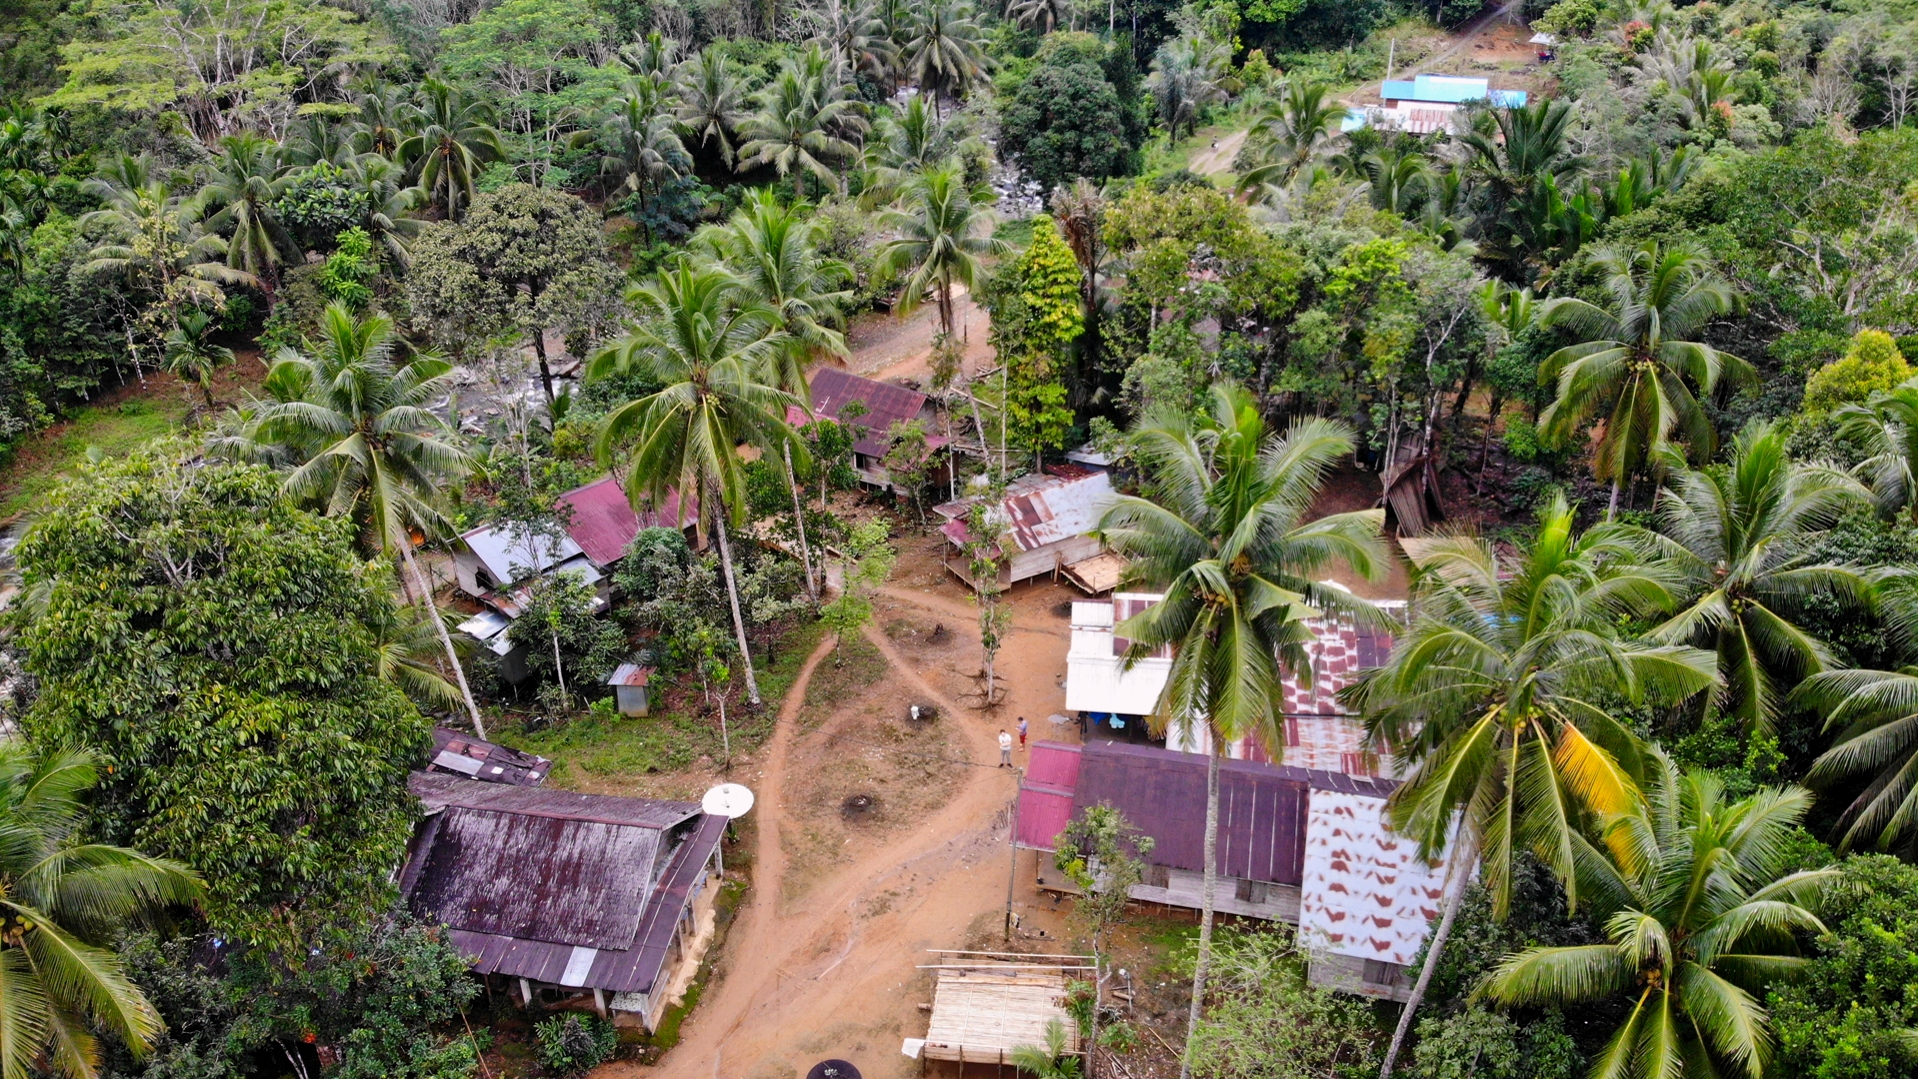 Kalimantan regenwoud